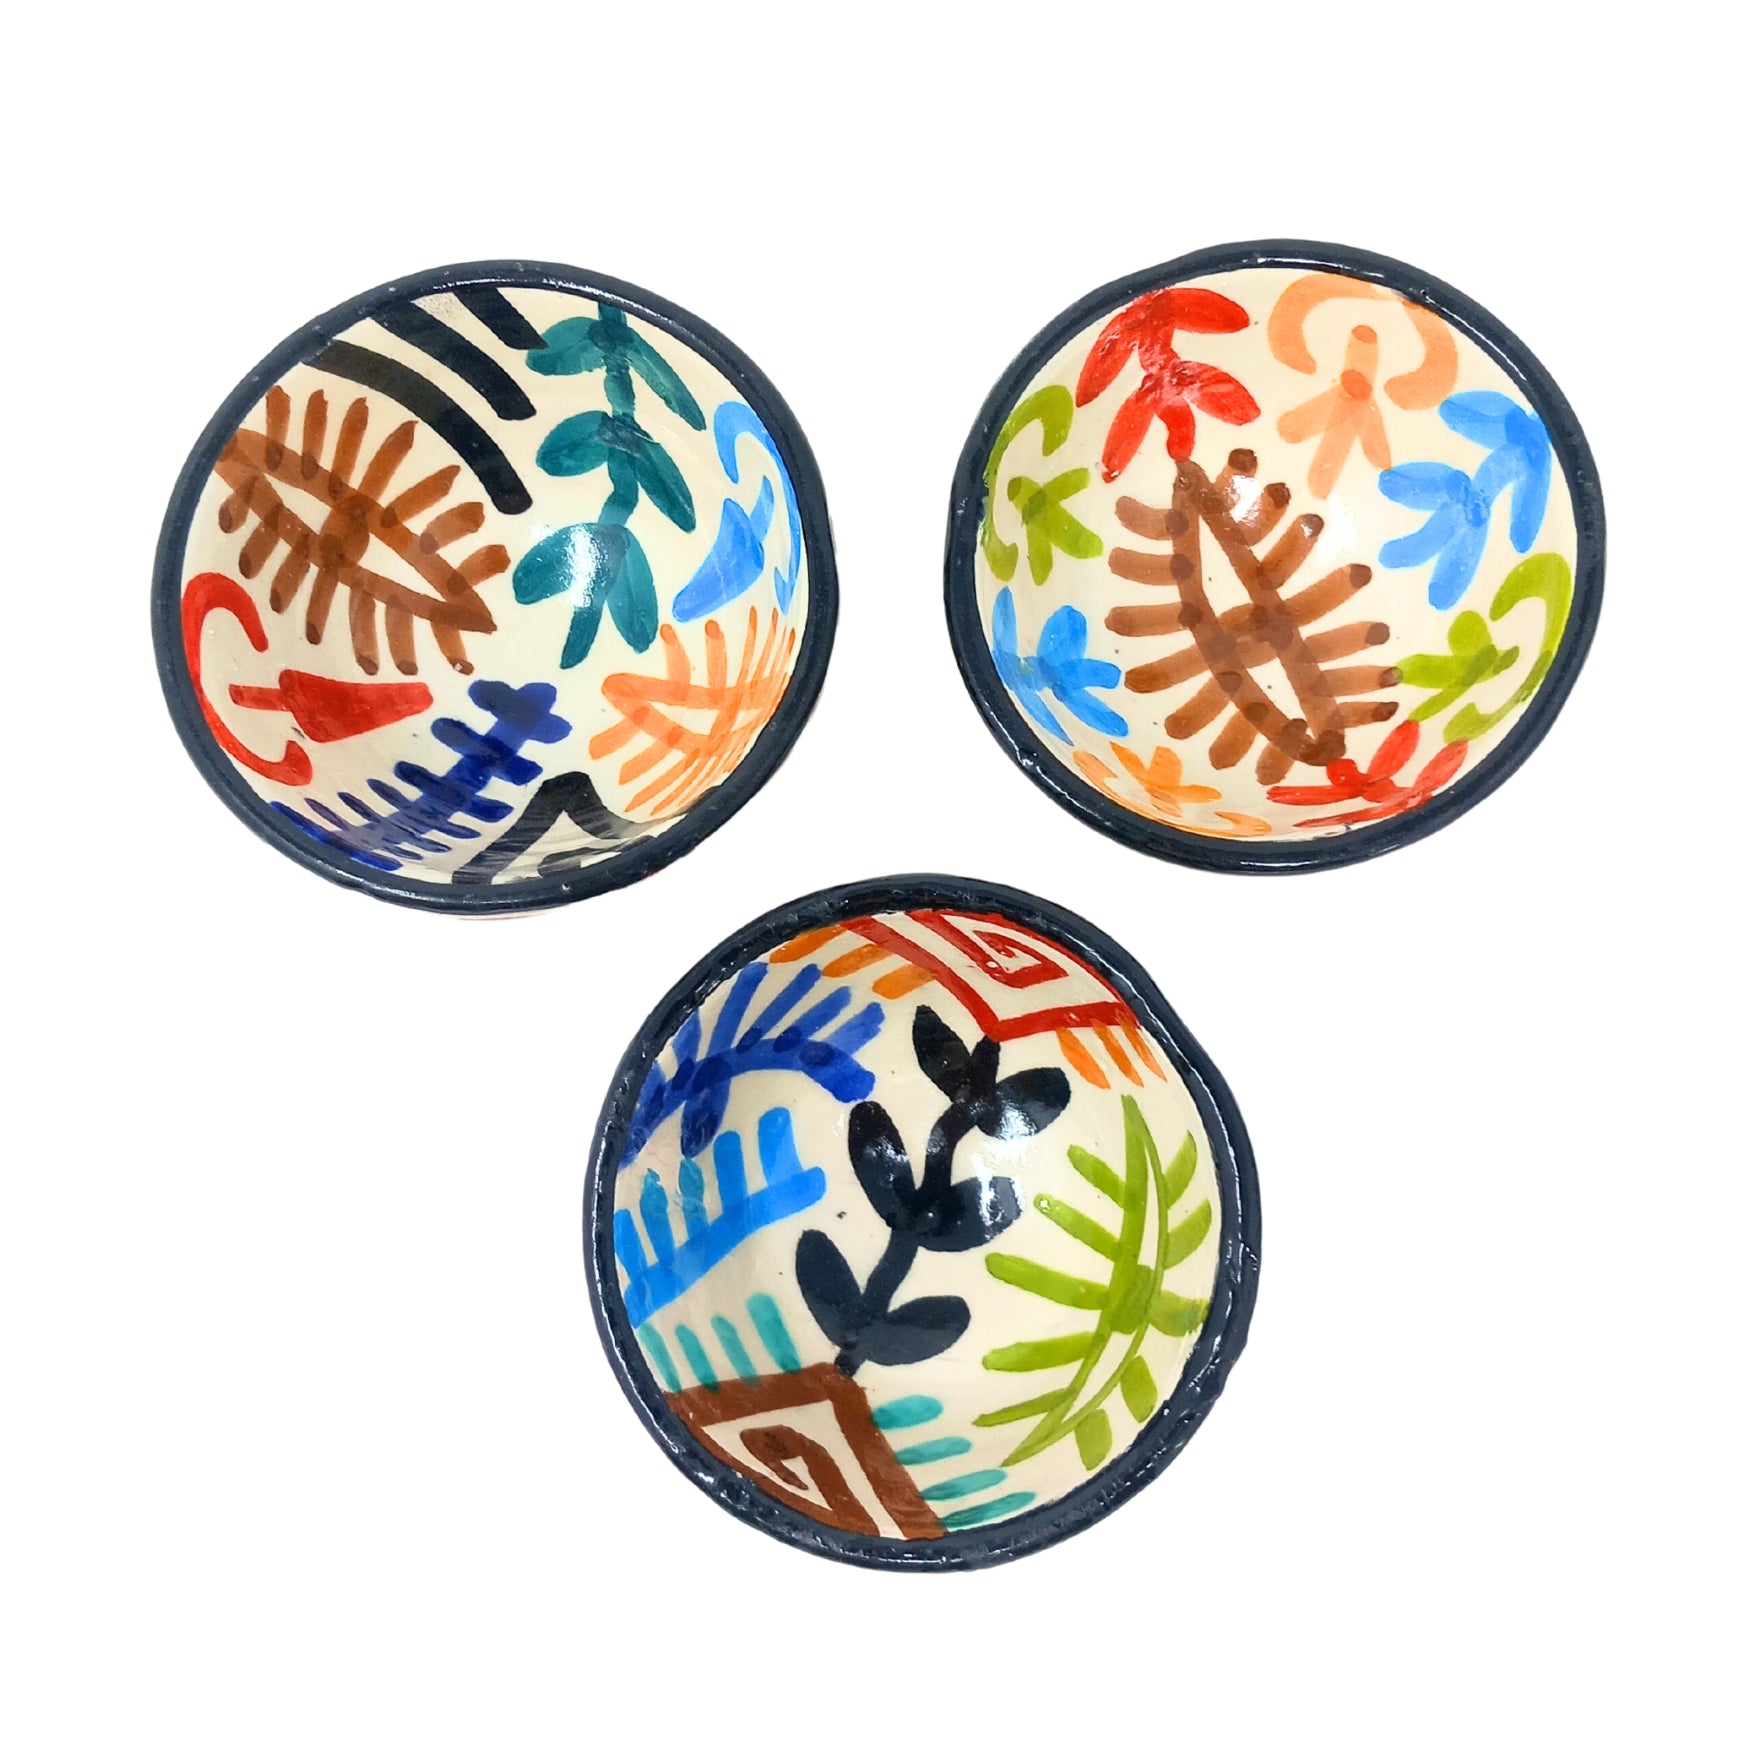 Bunte handbemalte Keramik-Minischale